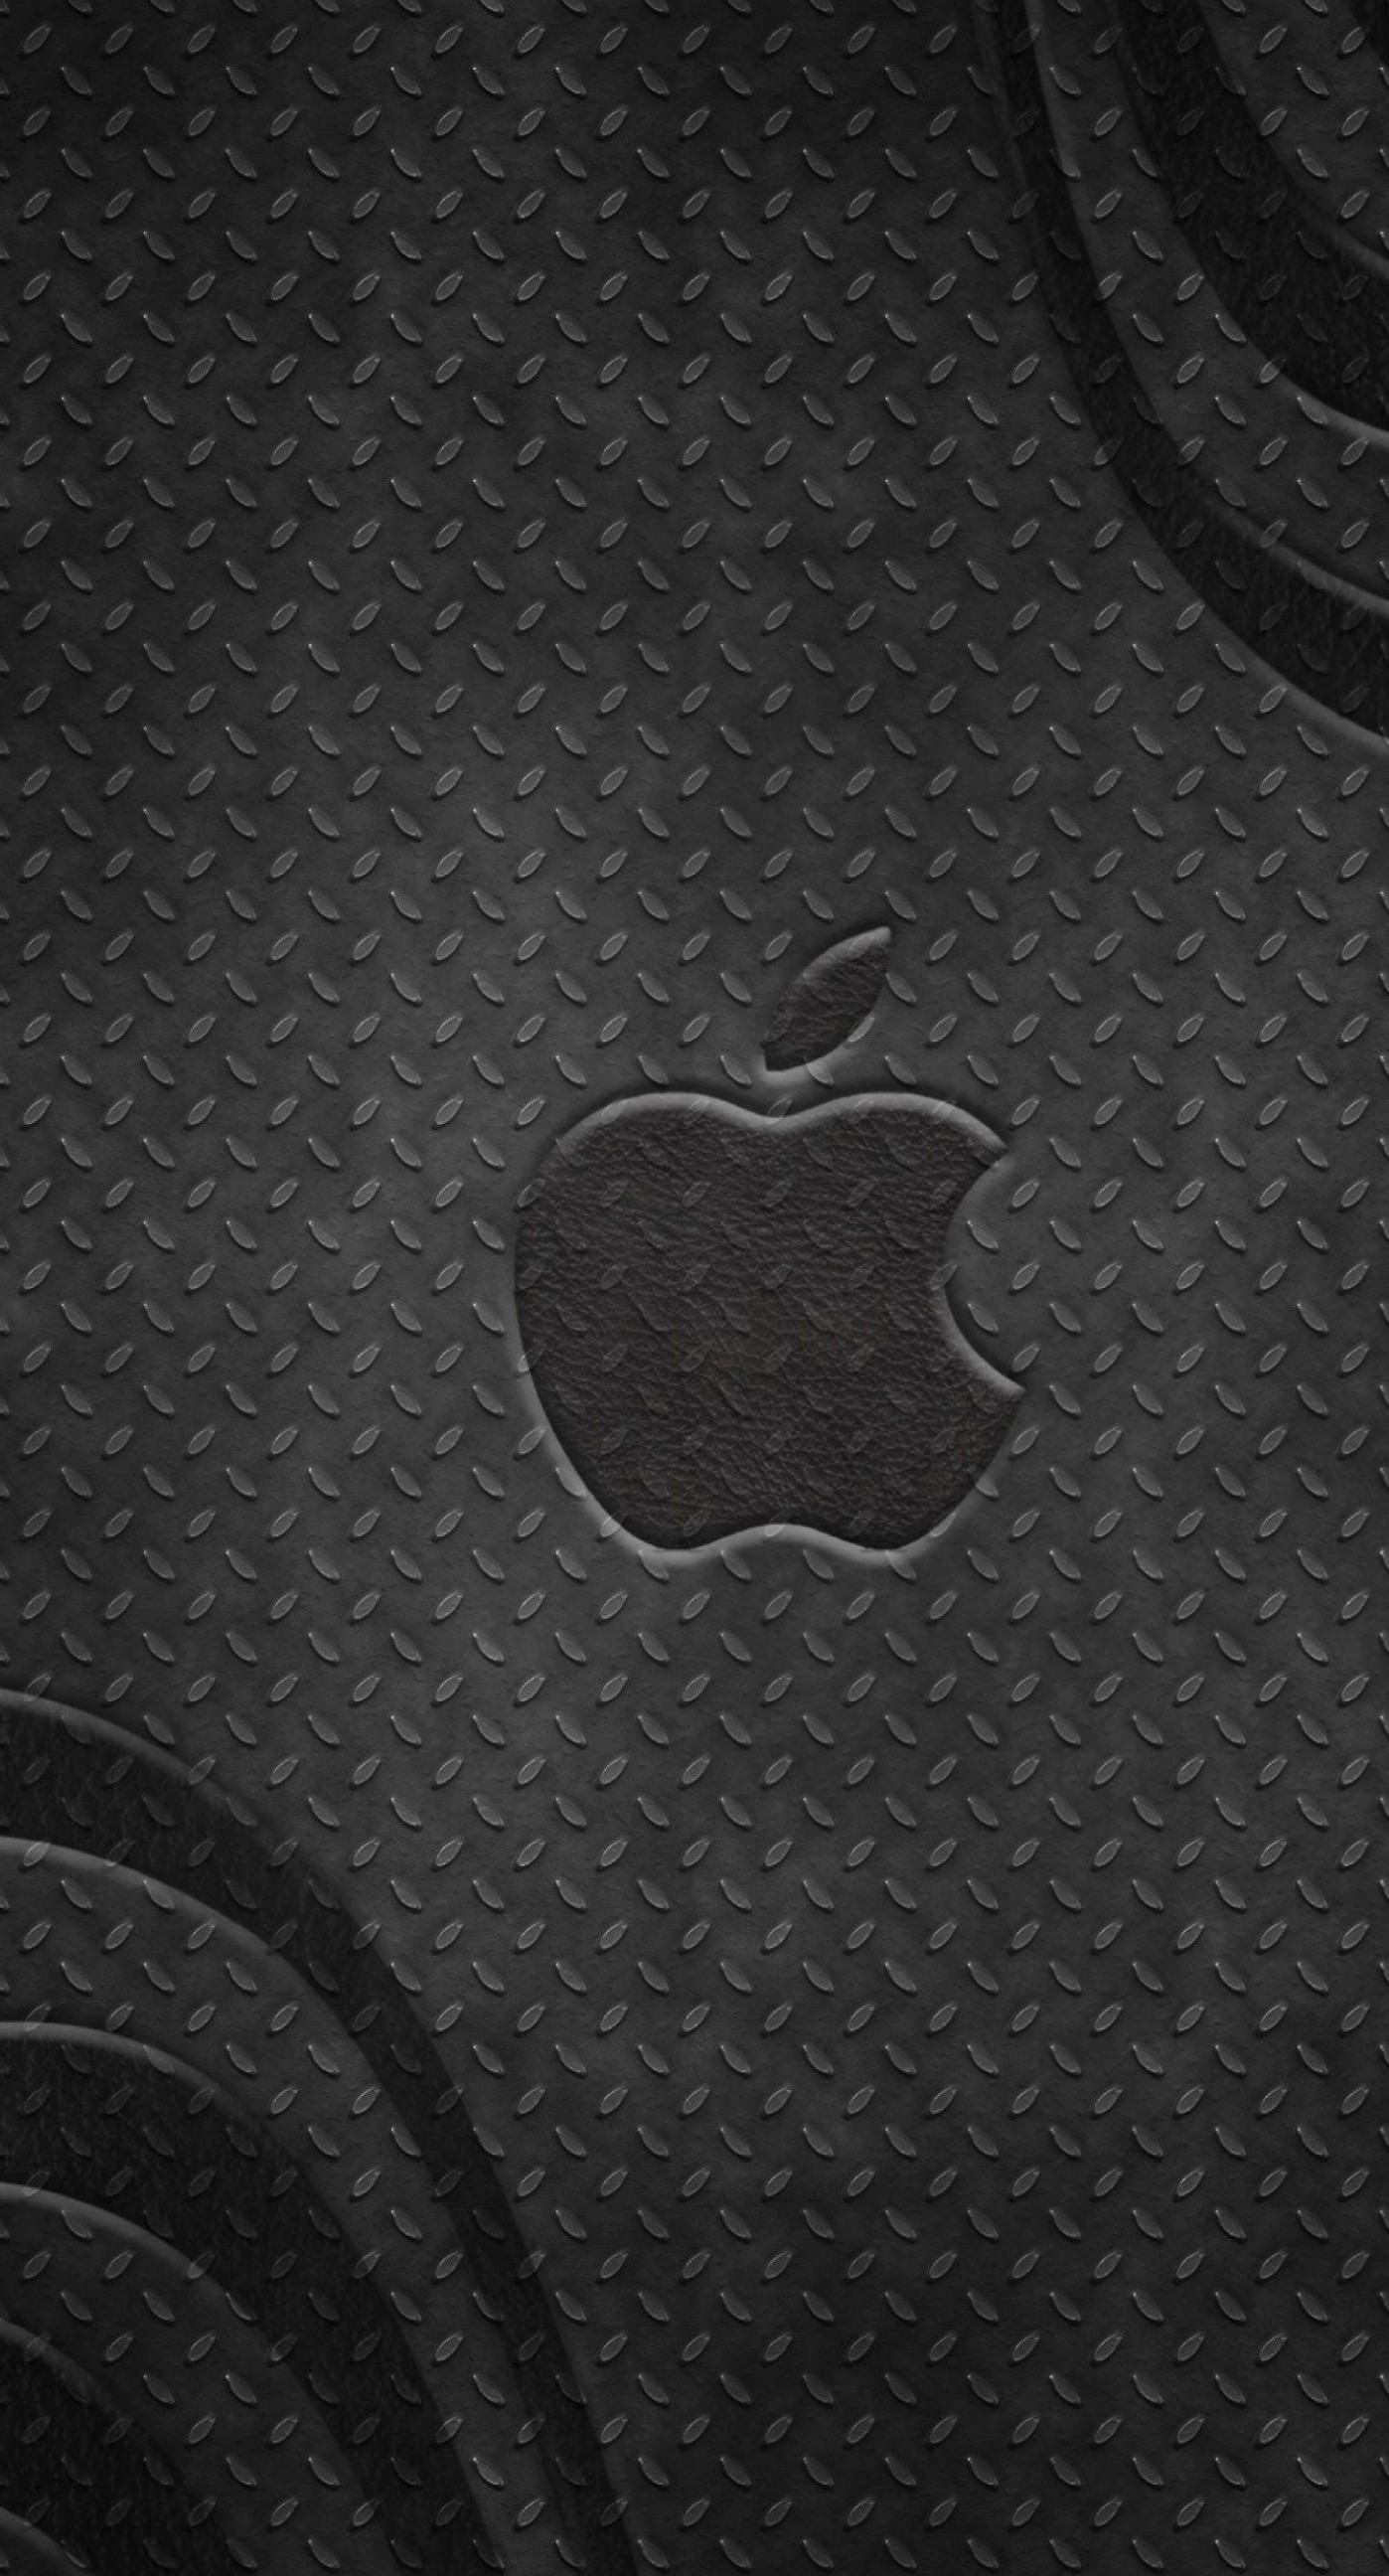 Apple黒 Wallpaper Sc Iphone7plus壁紙